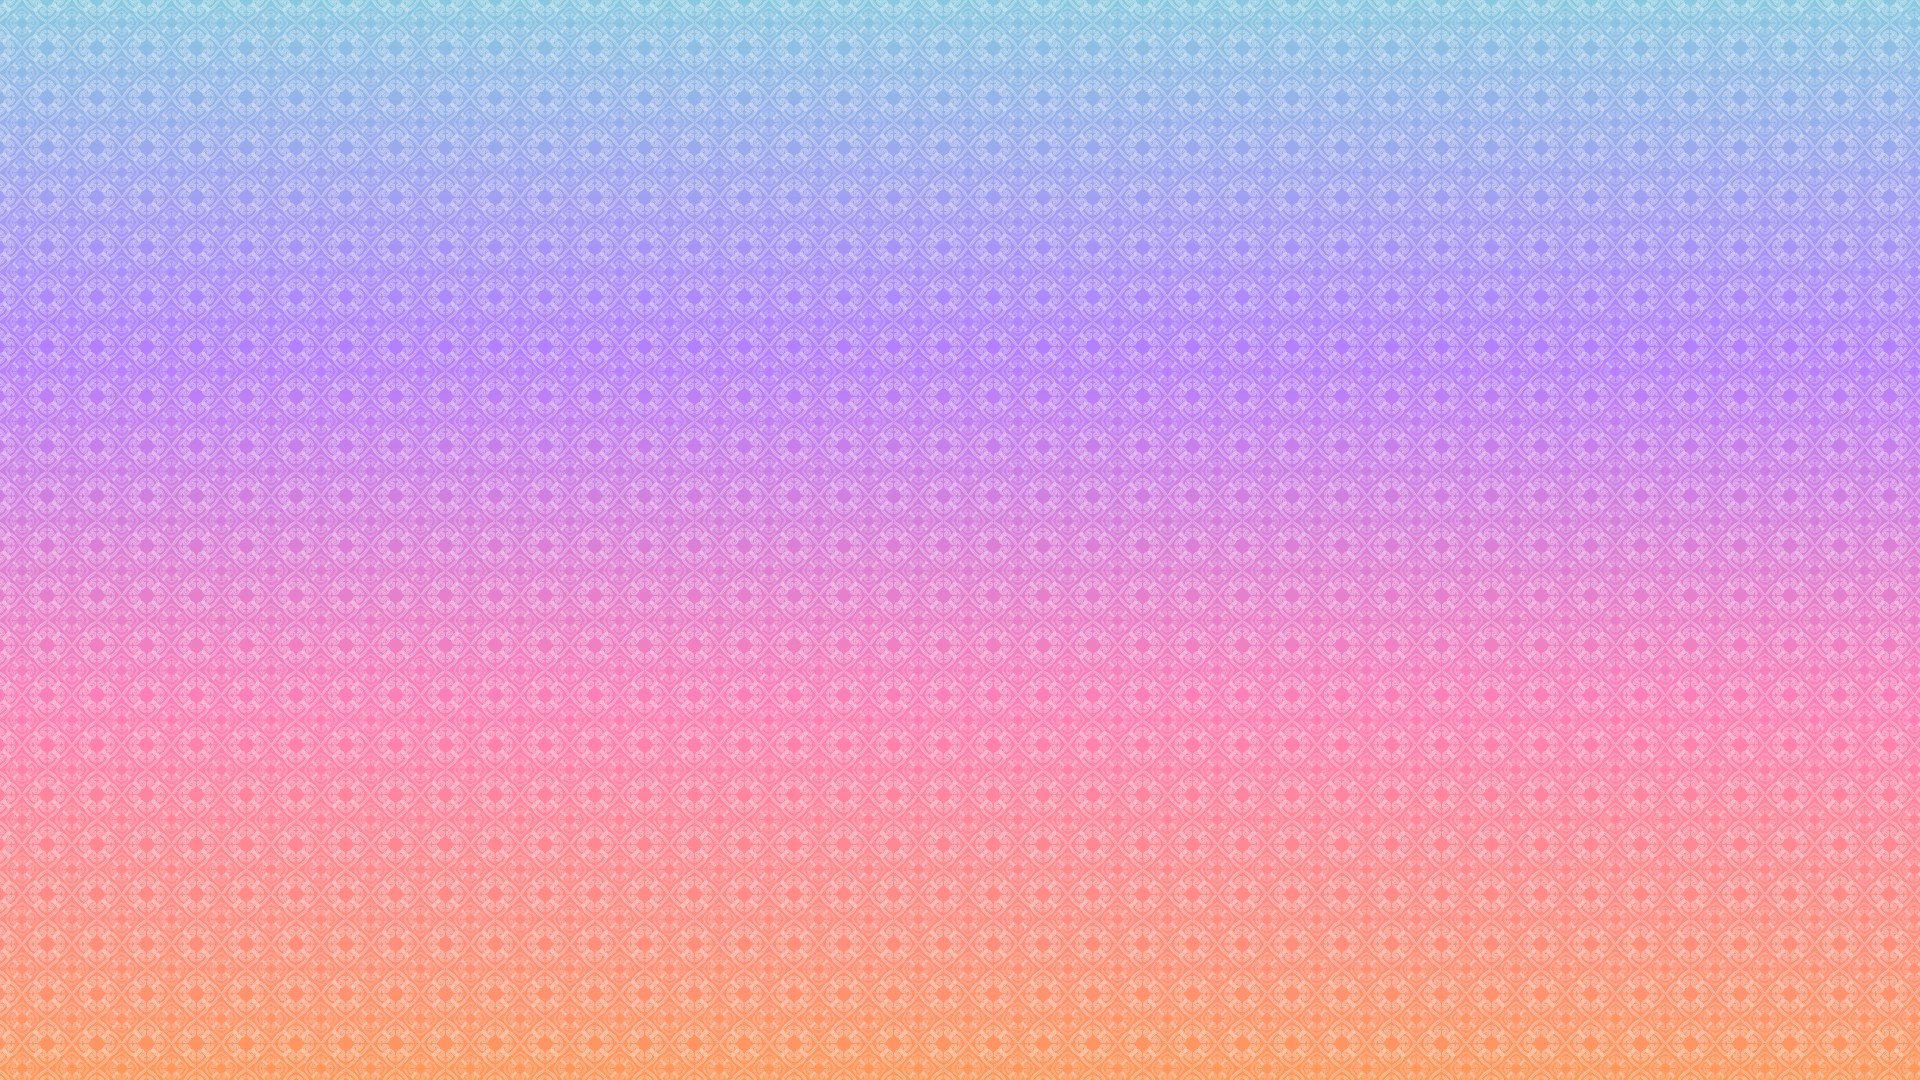 Free download pattern 1 56 horisontal rainbow HD wallpaper by elideli on [1920x1080] for your Desktop, Mobile & Tablet. Explore HD Pattern Wallpaper. Pattern Wallpaper Background, Free Wallpaper Patterns, Patterned Wallpaper for Desktop